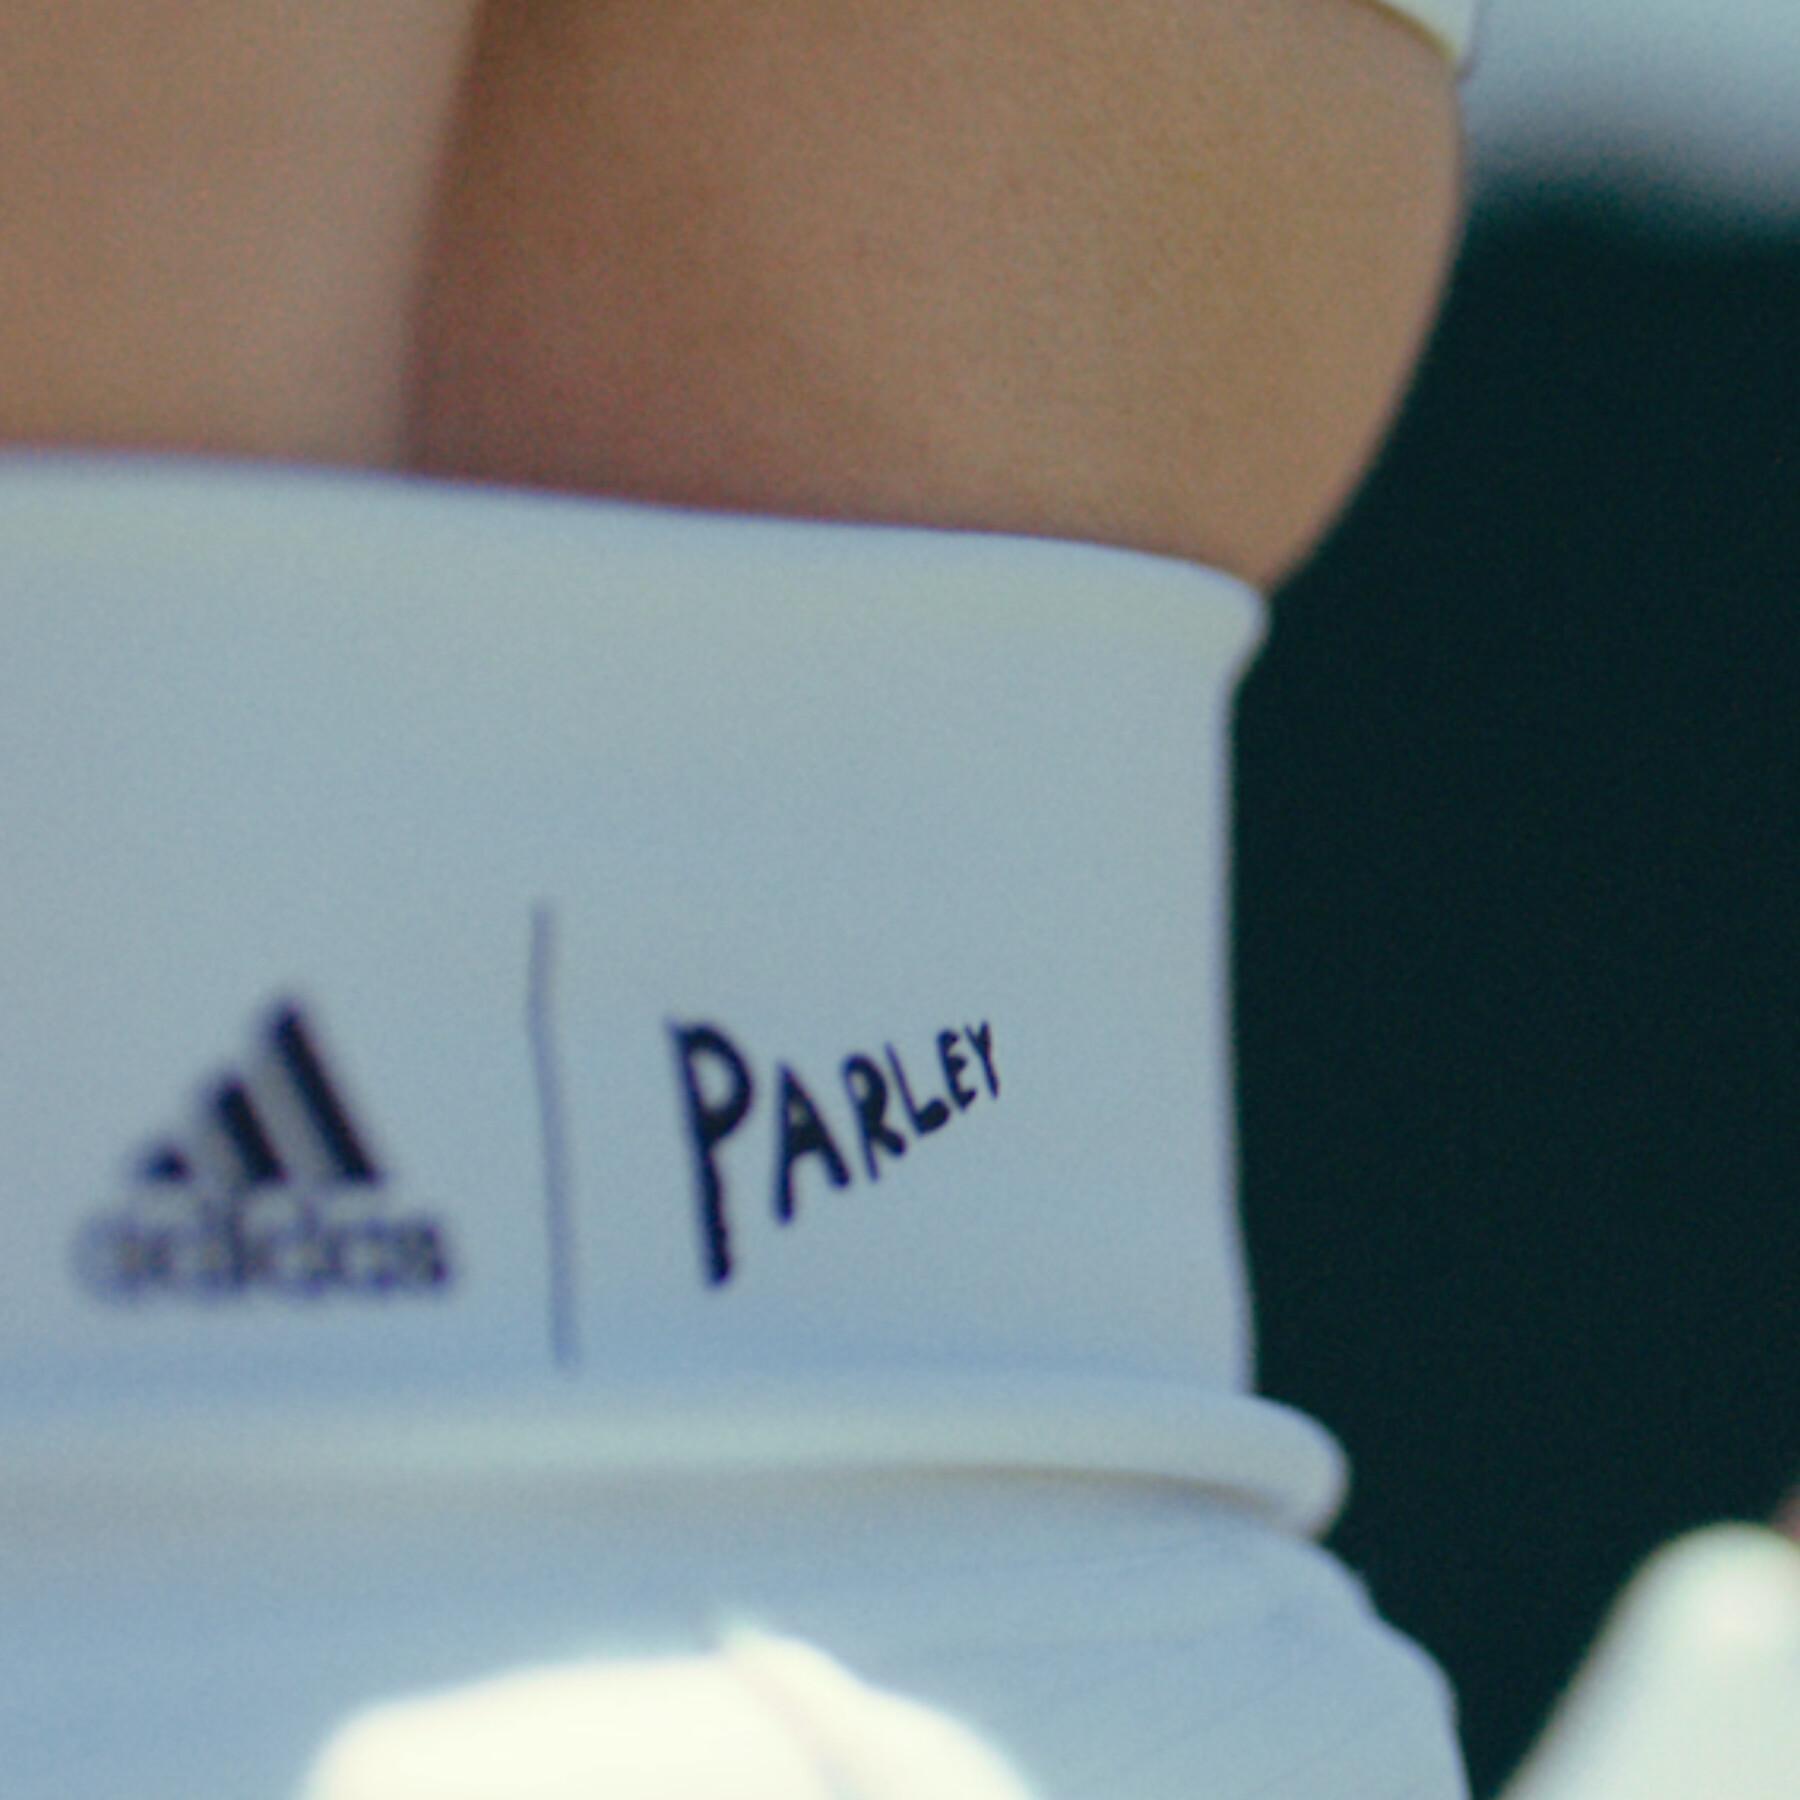 Women's tennis shorts adidas London